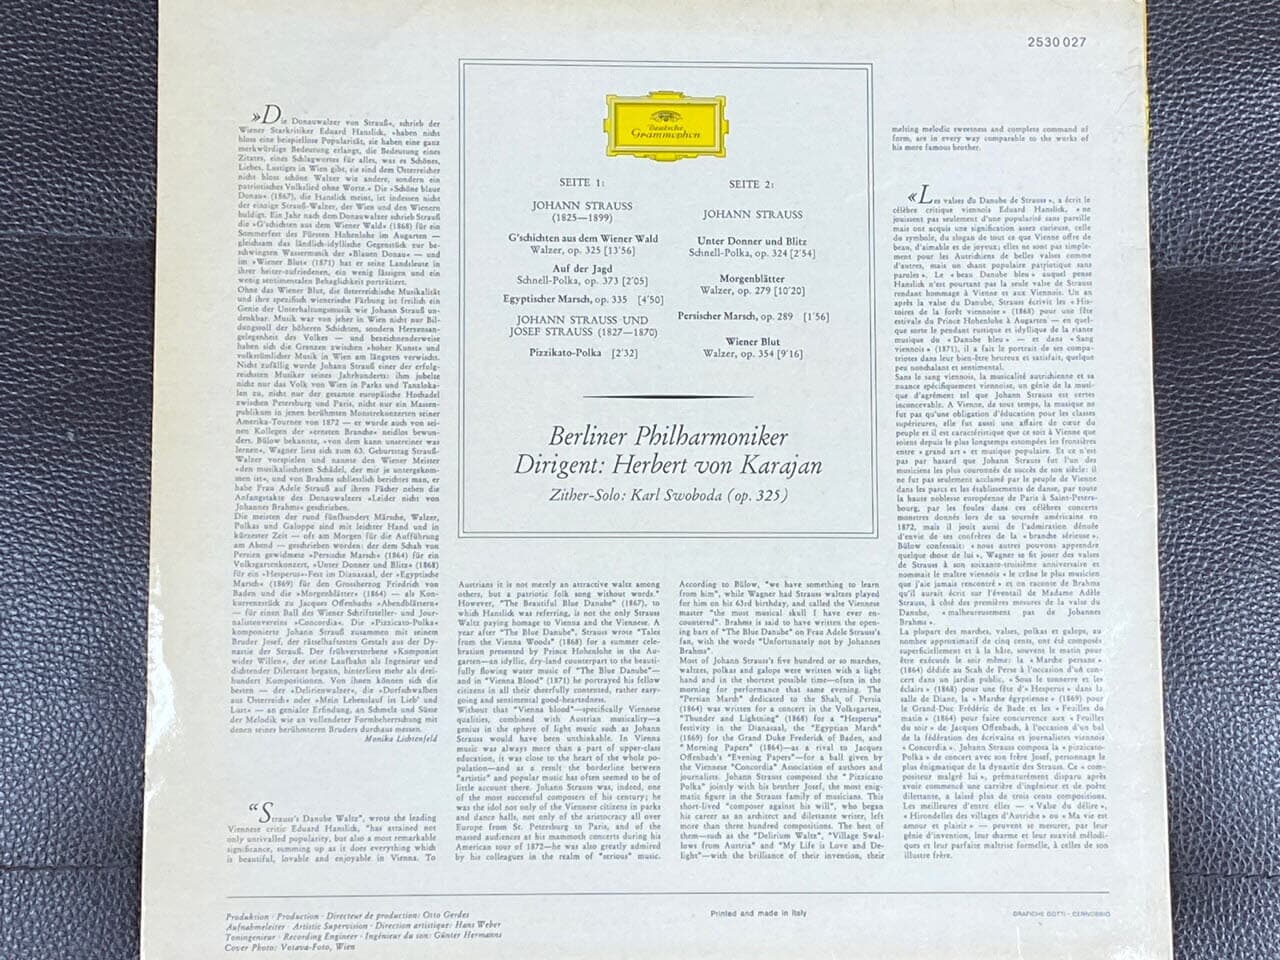 [LP] 카라얀 - Karajan - Johann & Josef Strauss Walzer, Polkas, Marsche LP [이태리반]